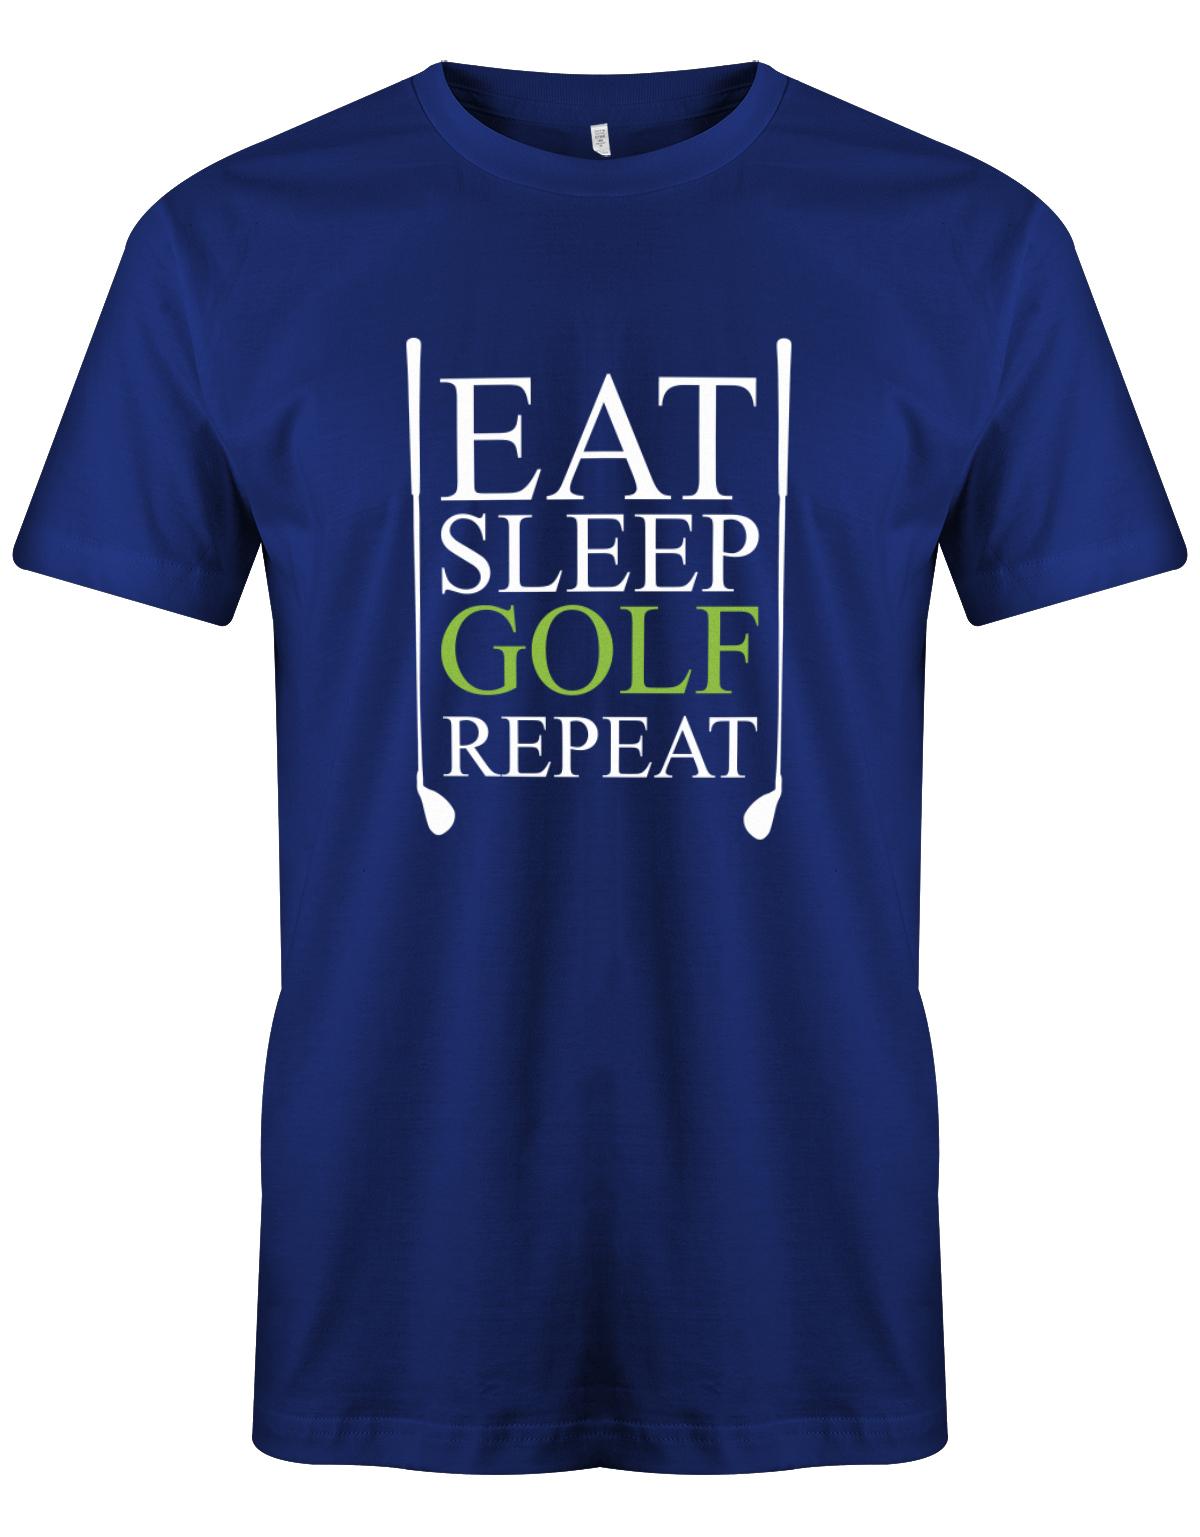 East-Sleep-golf-Repeat-Herren-Shirt-Royalblau